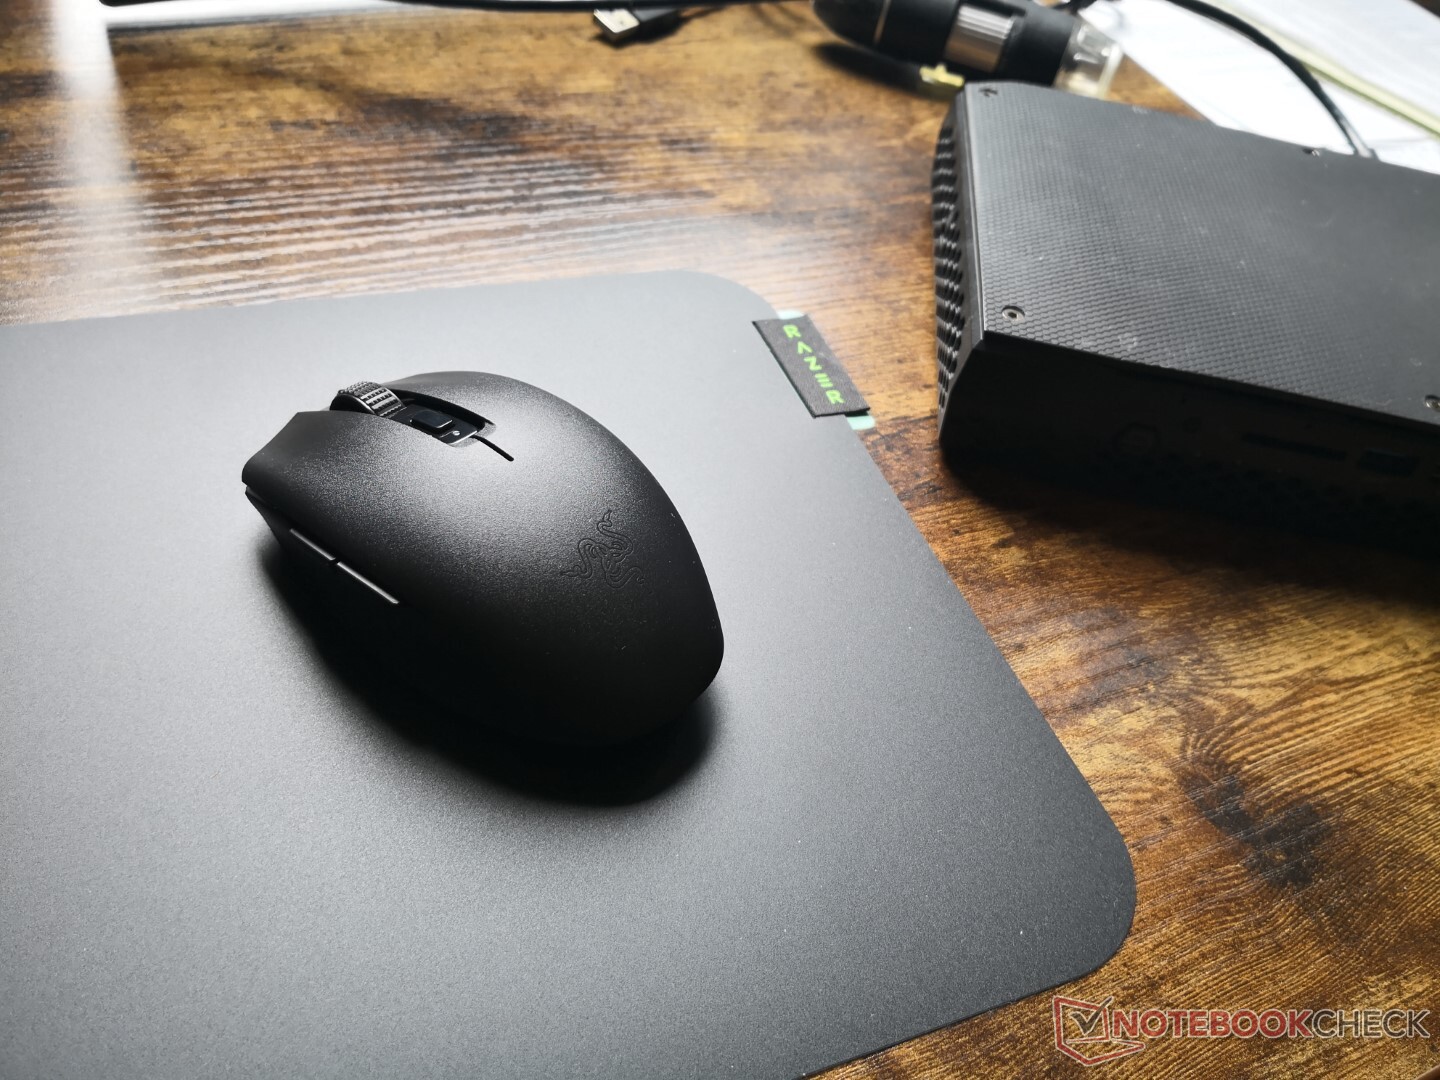 Razer Orochi V2 Review - Best Wireless Mouse of 2021?